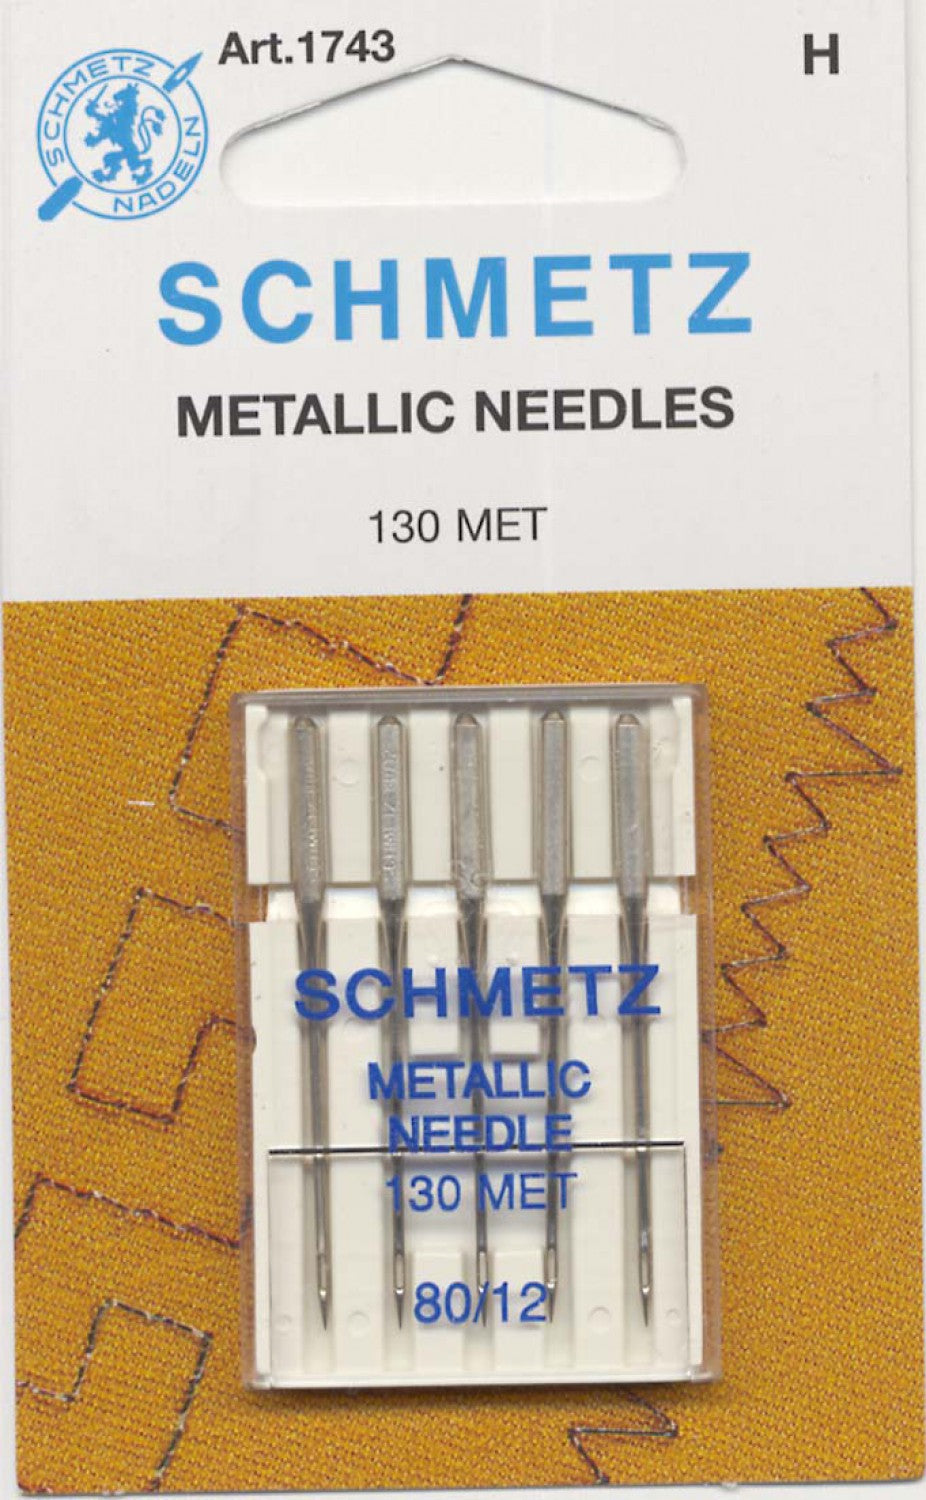 Schmetz Metallic Needle - Size 80/12 - 1 Package of 5 Needles